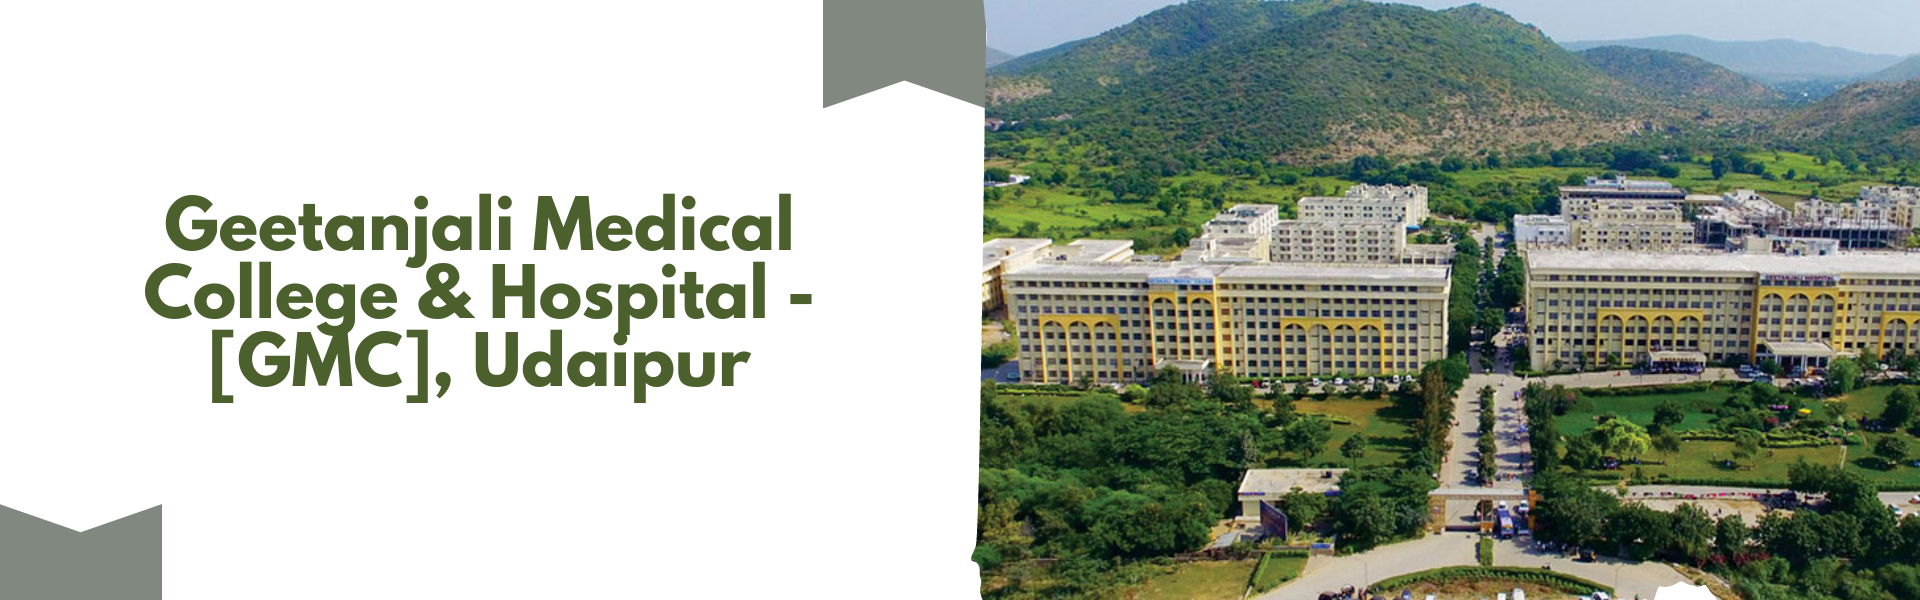 Geetanjali Medical College & Hospital - [GMC], Udaipur